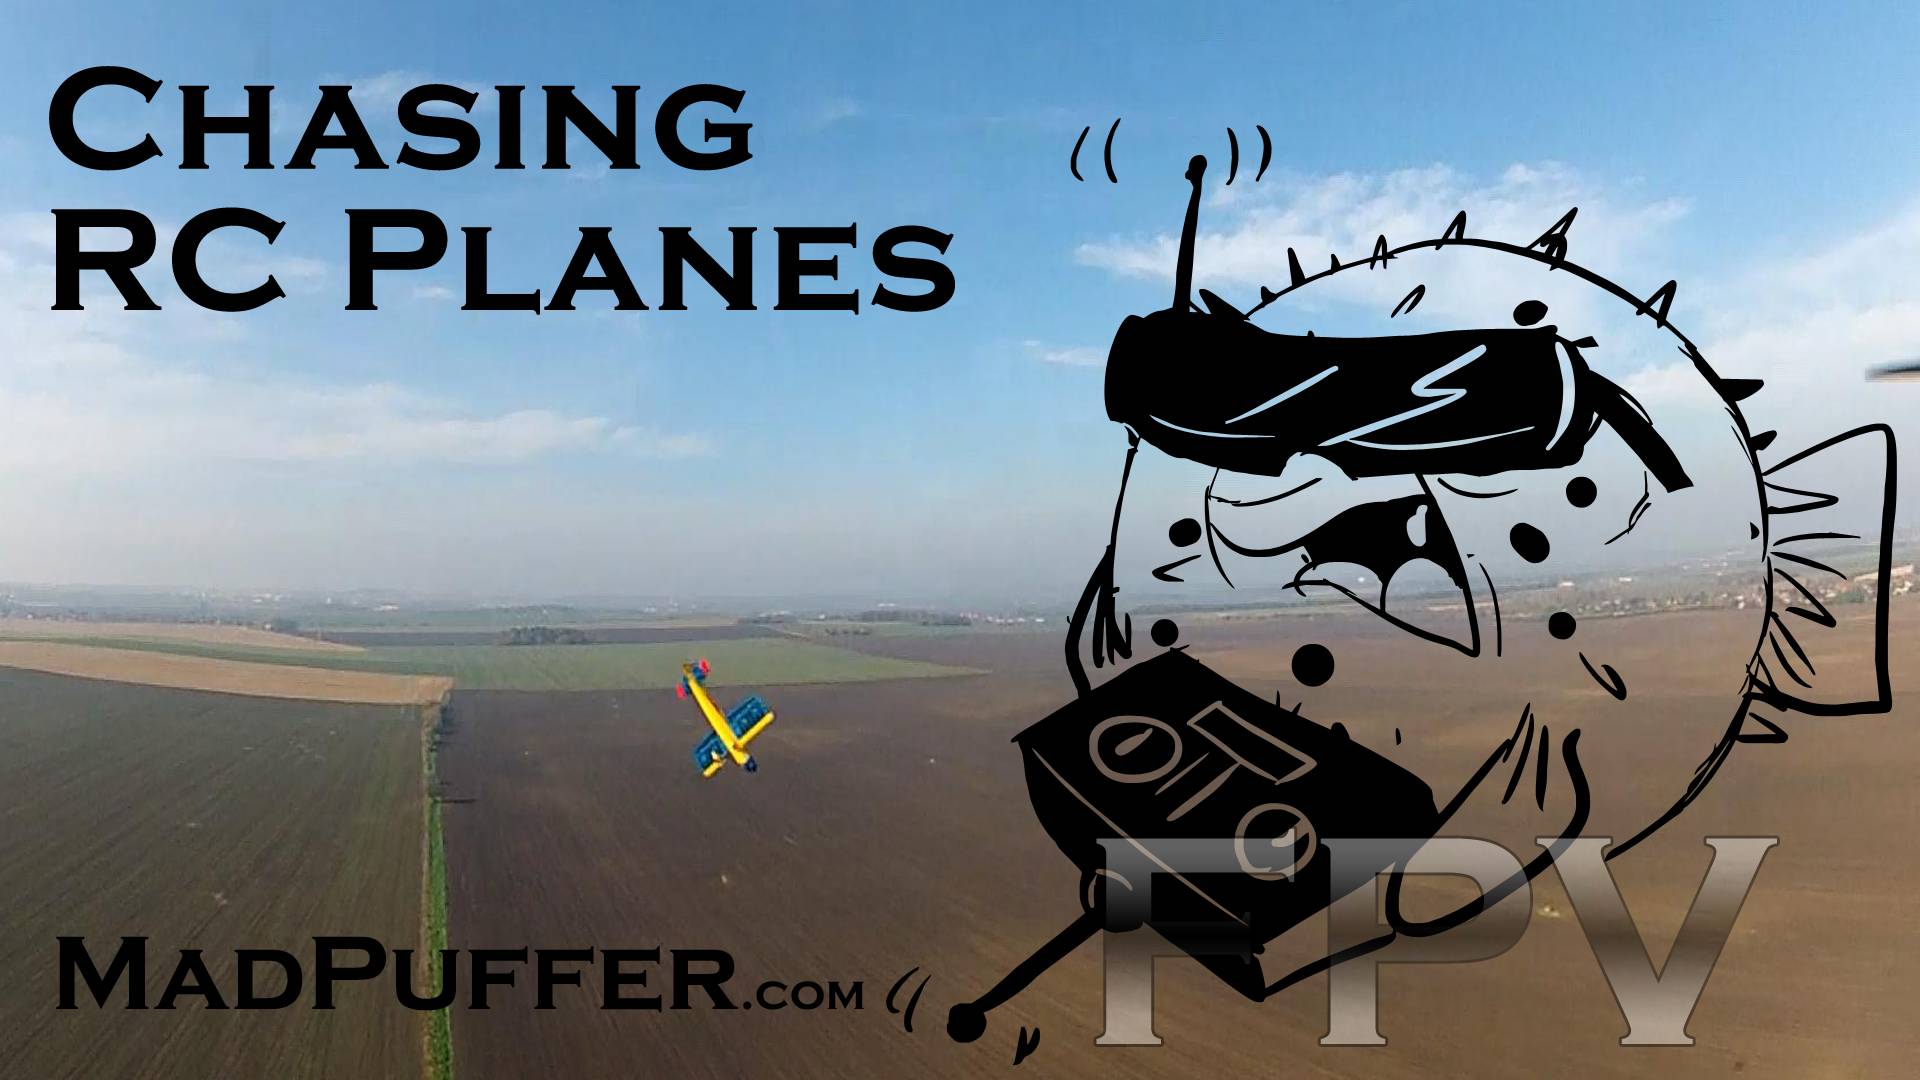 Chasing RC planes